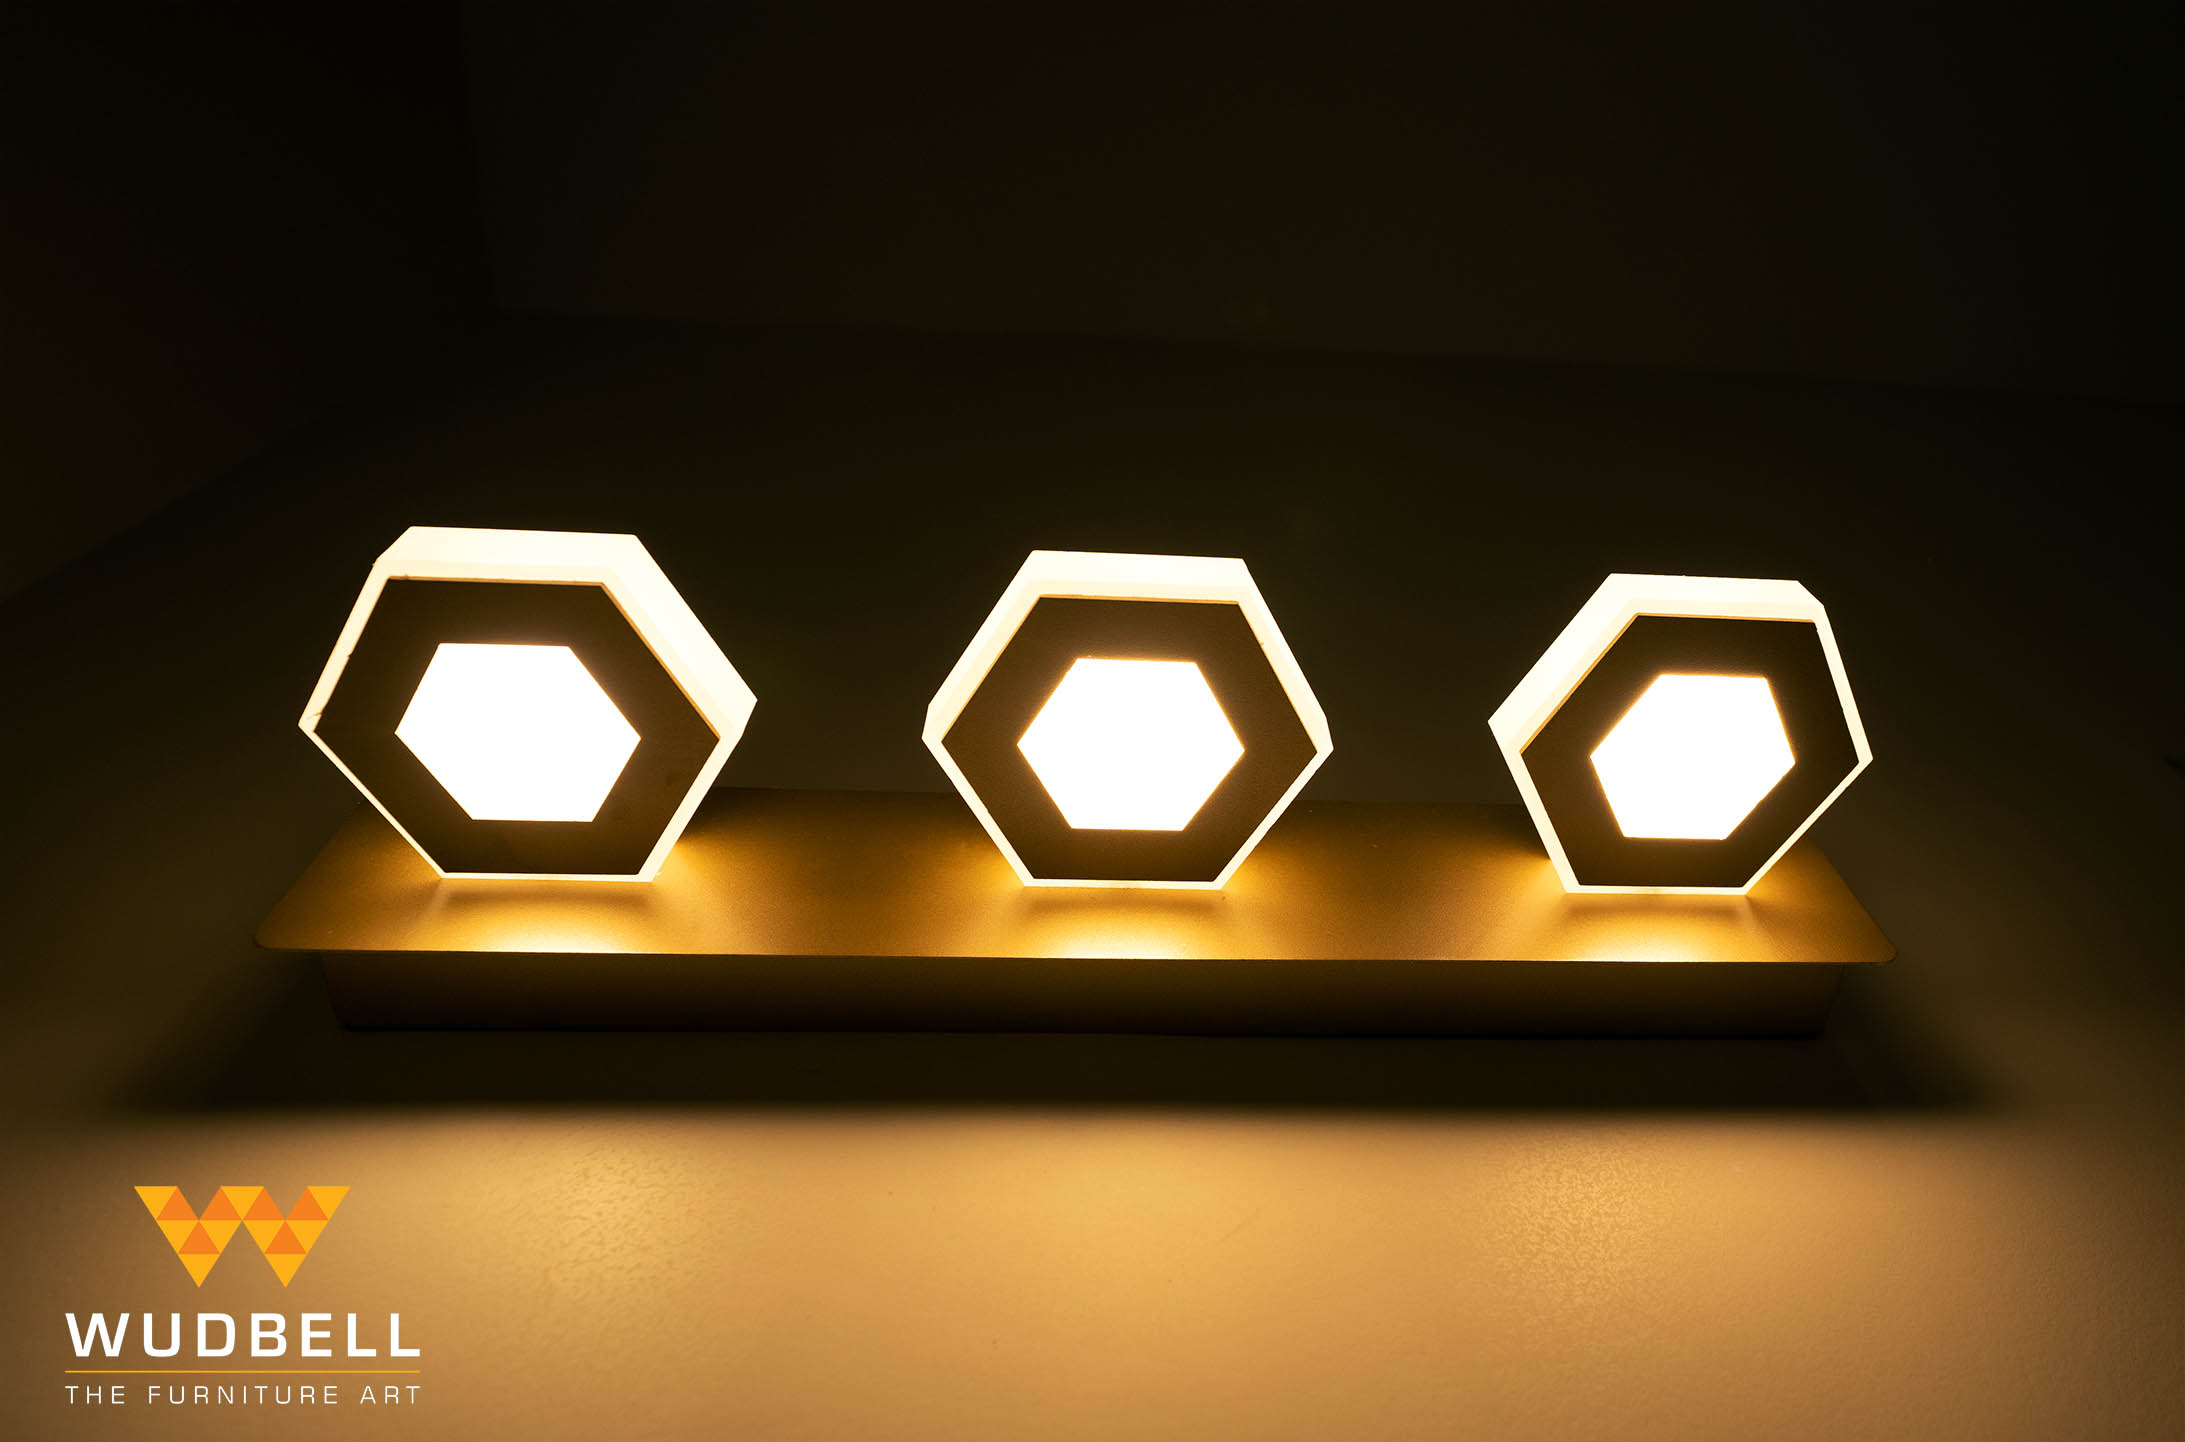 The uniquely shaped LED lights adorning the vanity unit